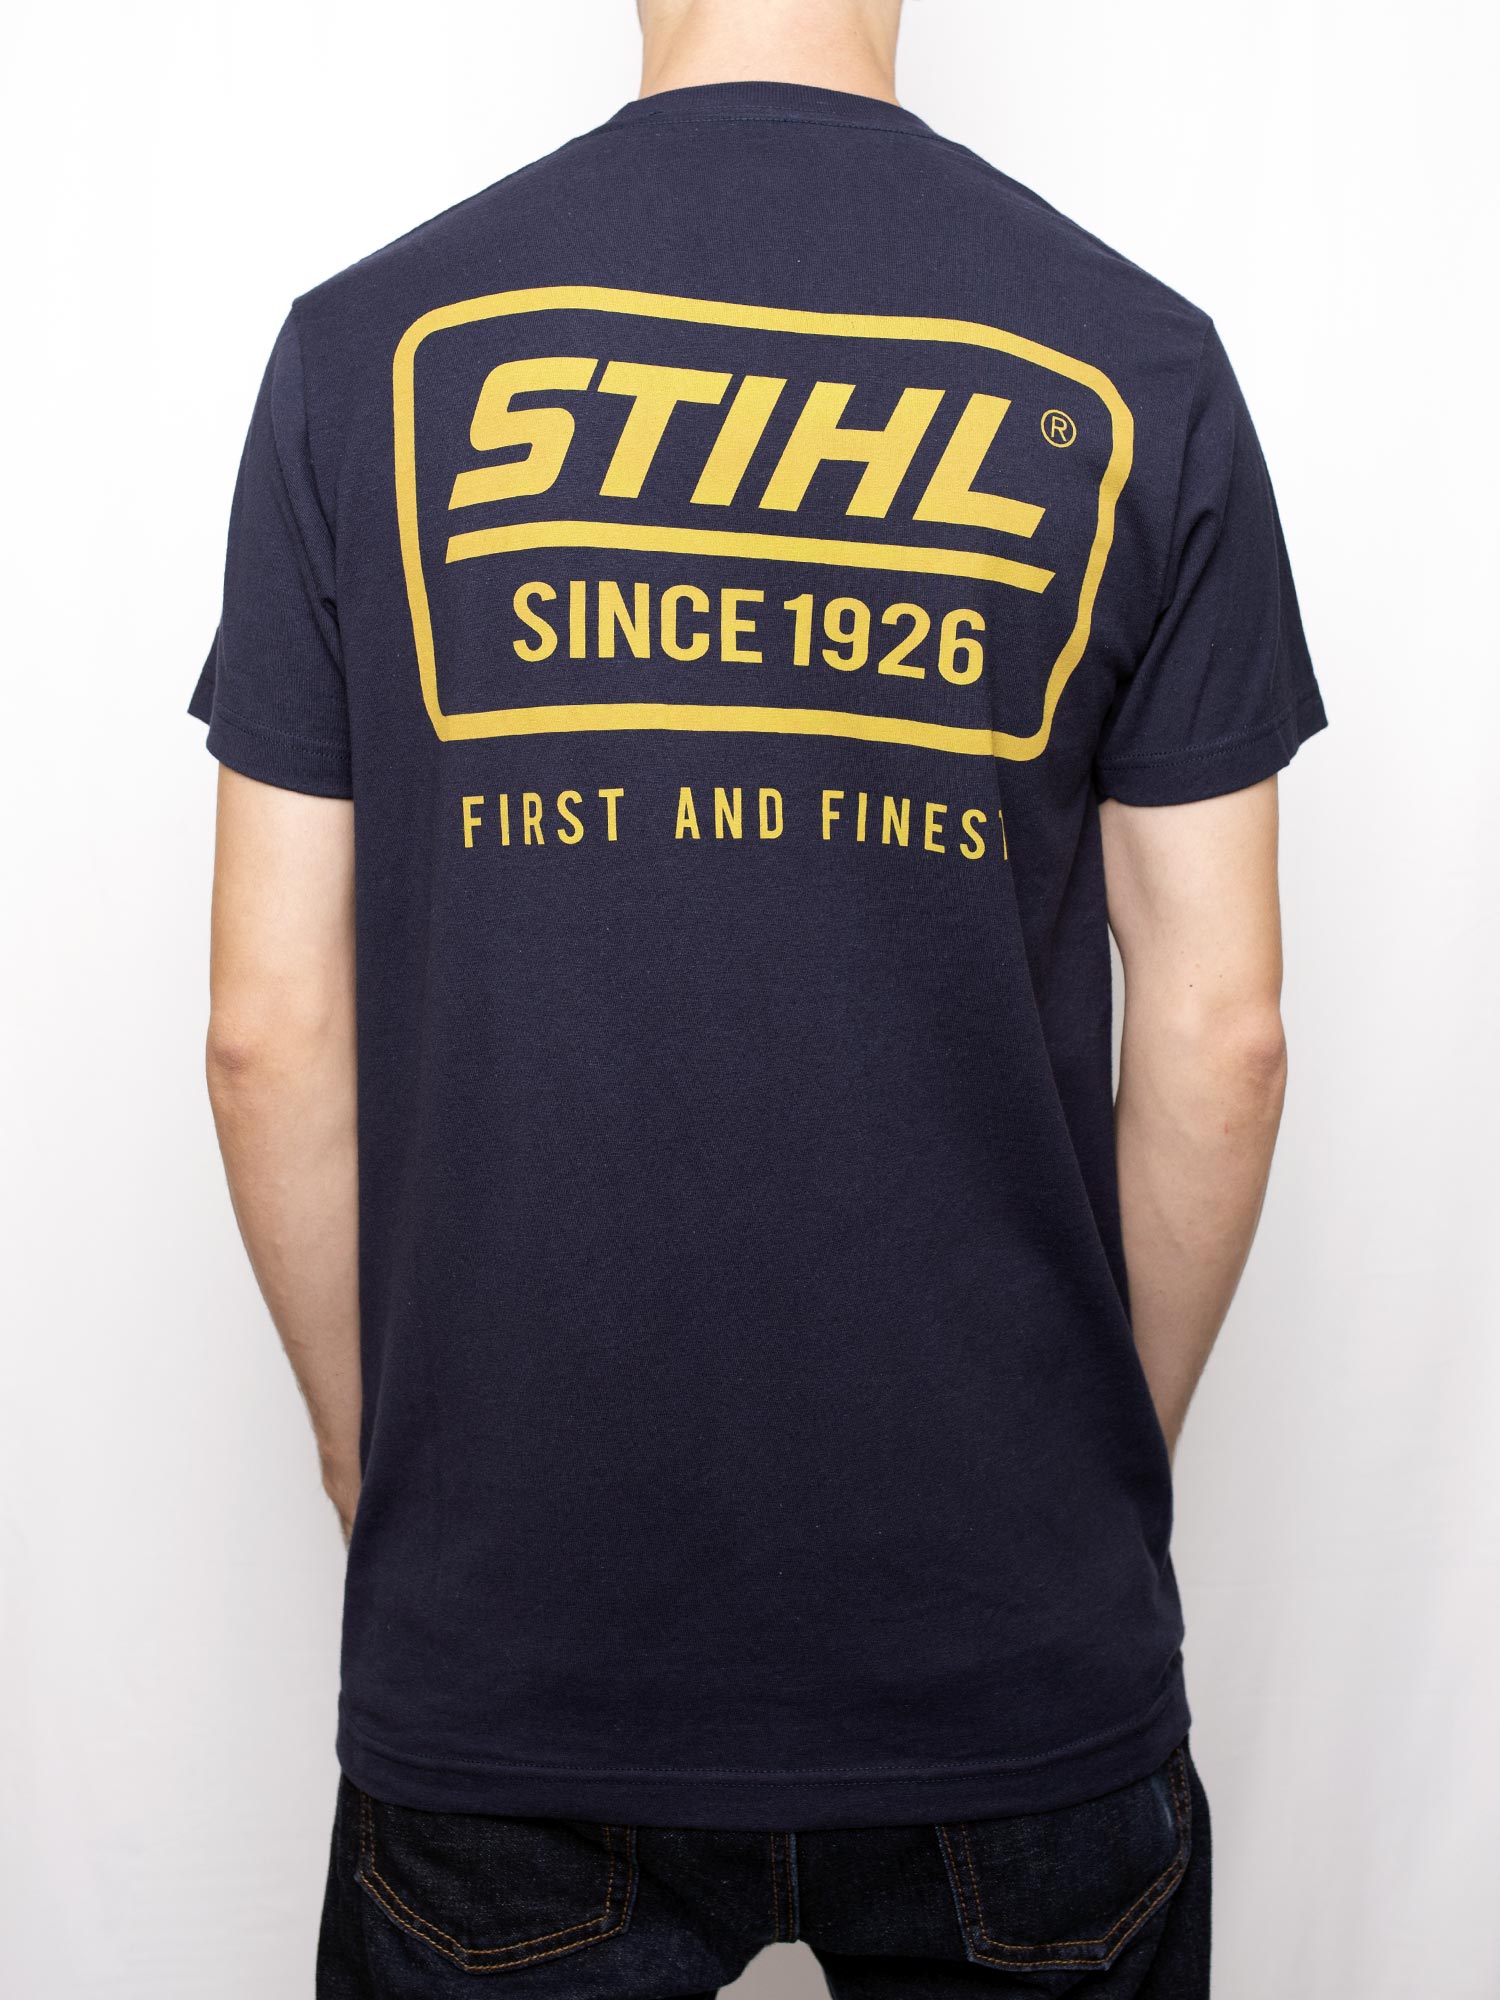 STIHL 1926 T-Shirt